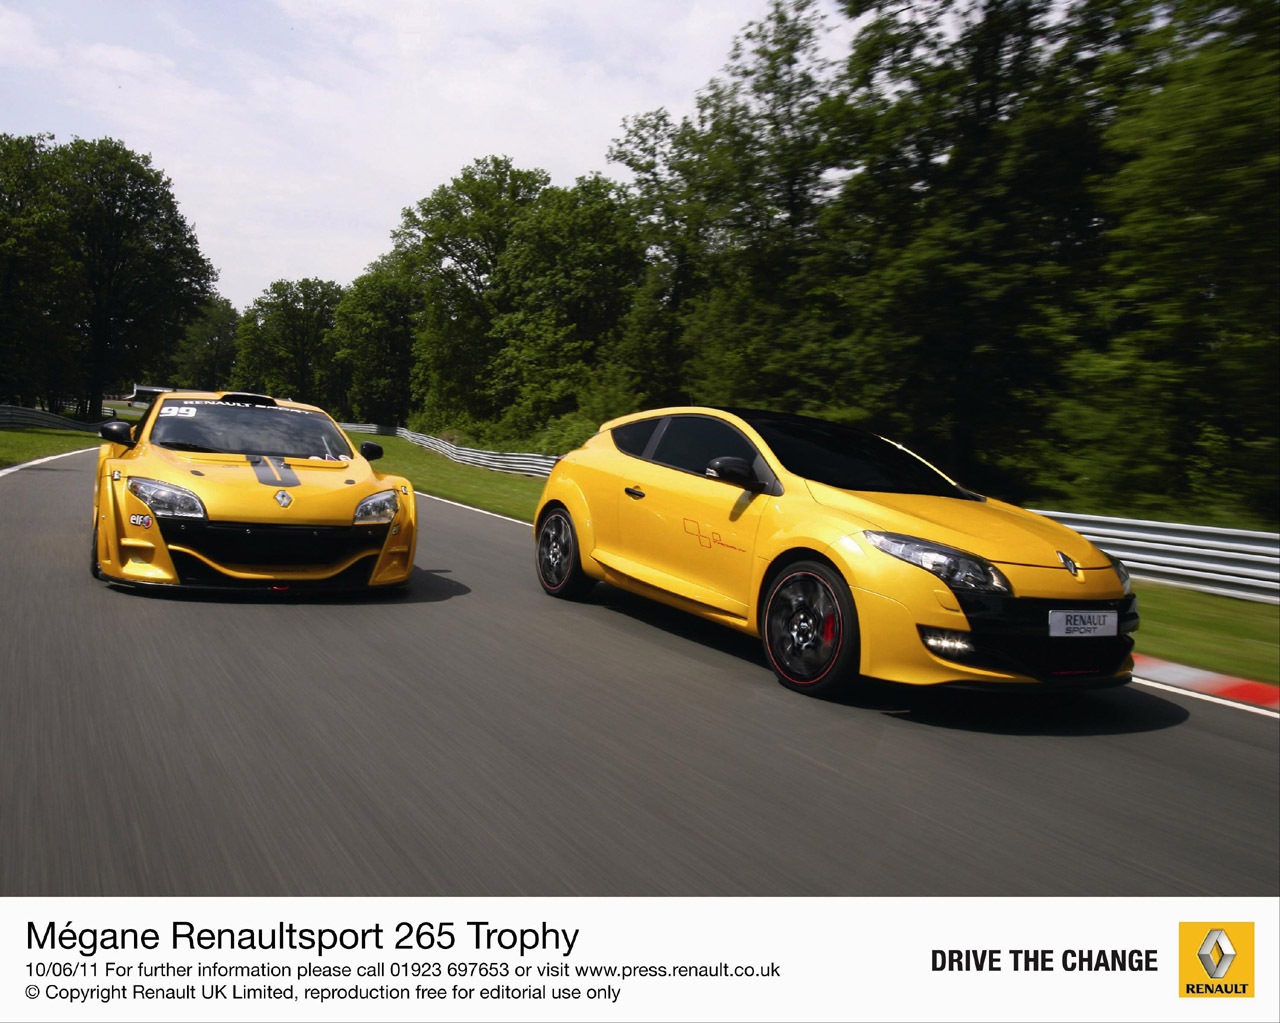 Renault Megane RS Trophy Nurburgring record